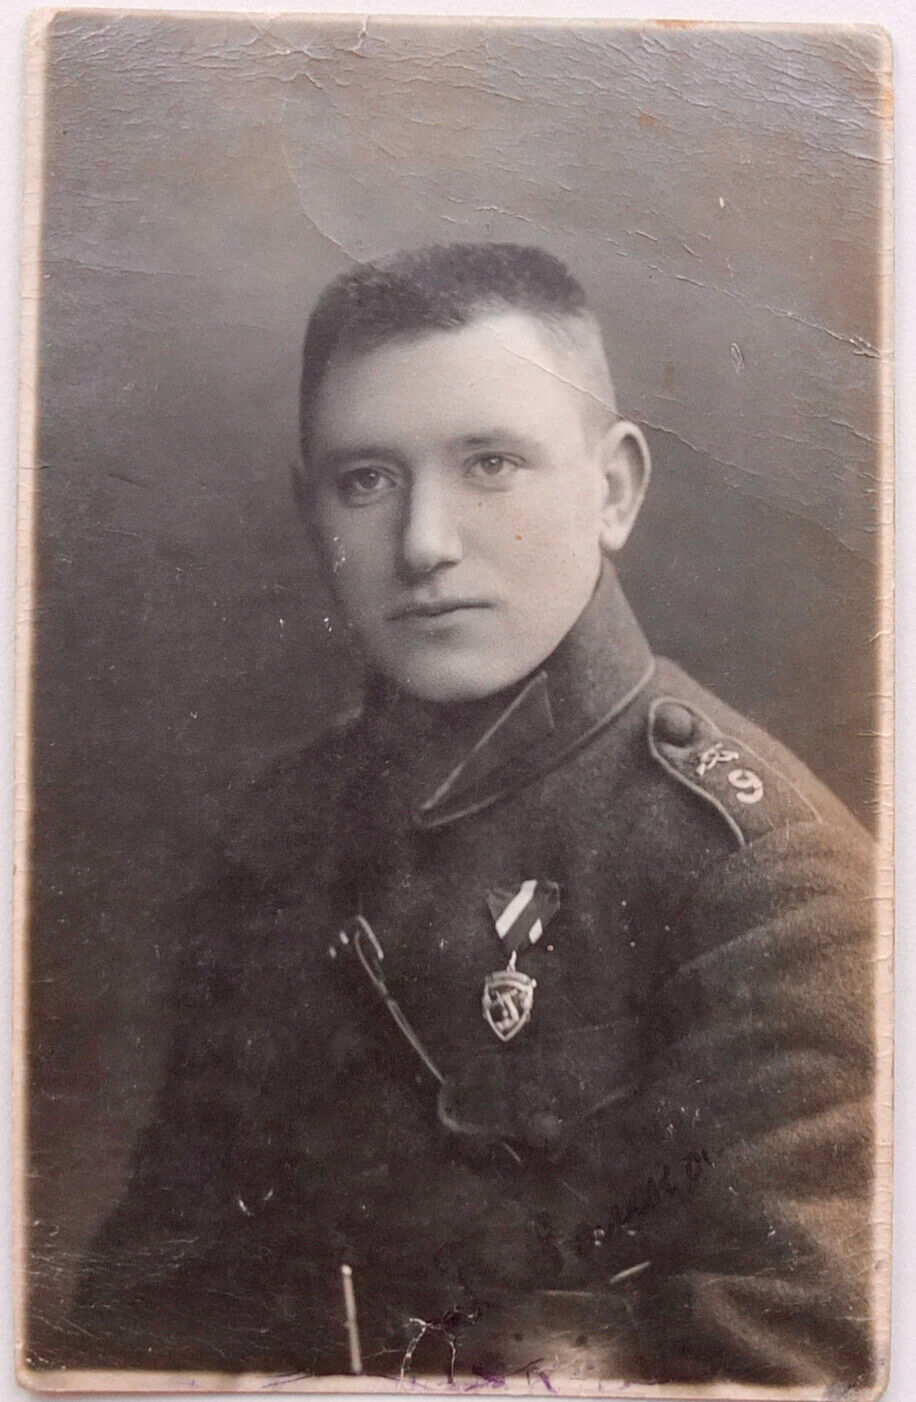 Latvia Militaryman 9th Regiment Commemorative medal Antique Photo